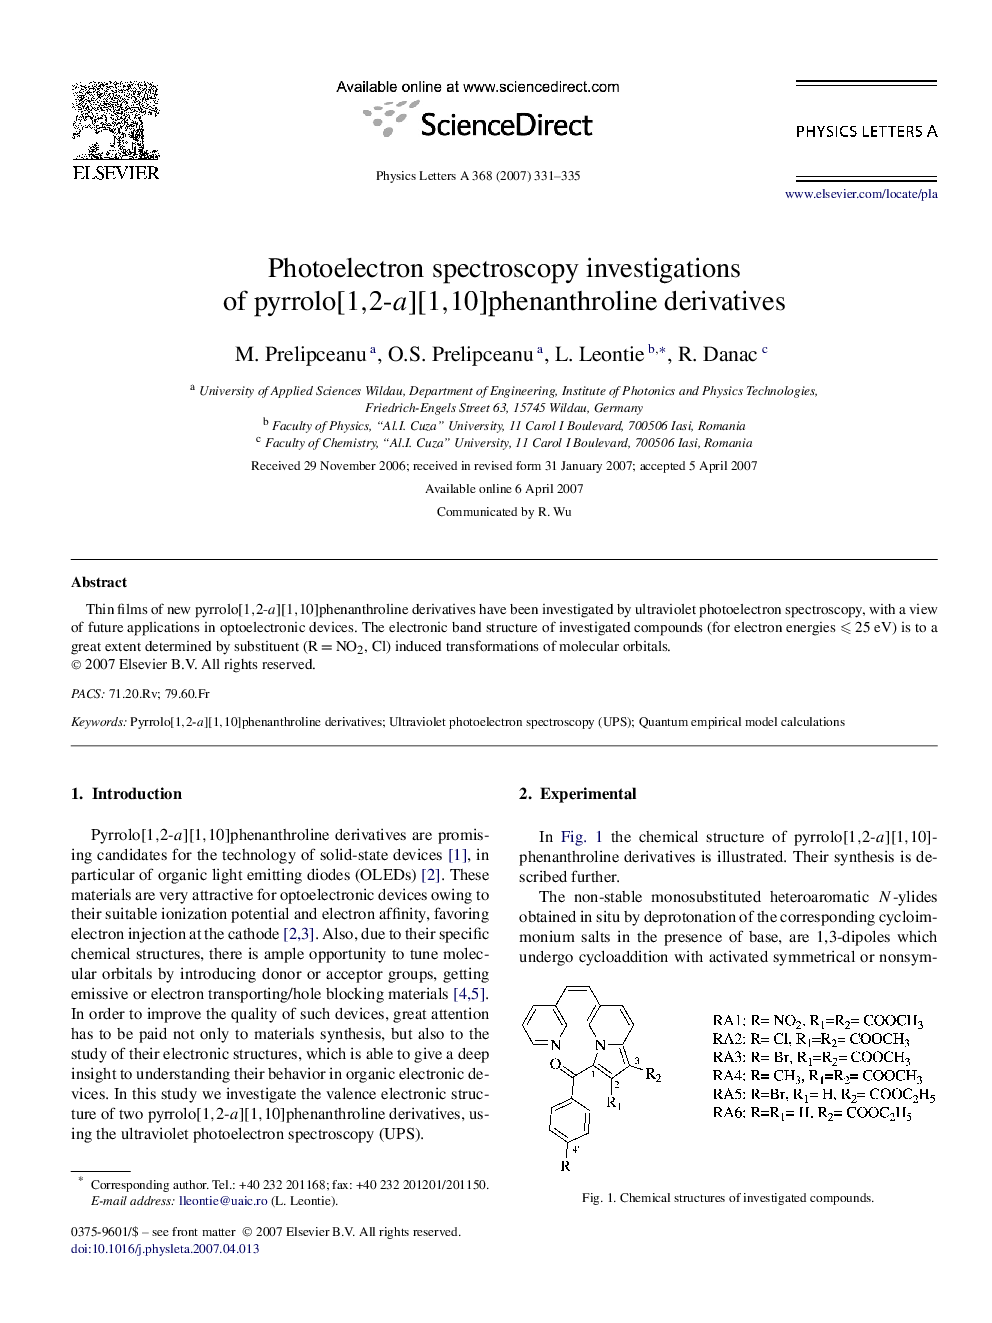 Photoelectron spectroscopy investigations of pyrrolo[1,2-a][1,10]phenanthroline derivatives